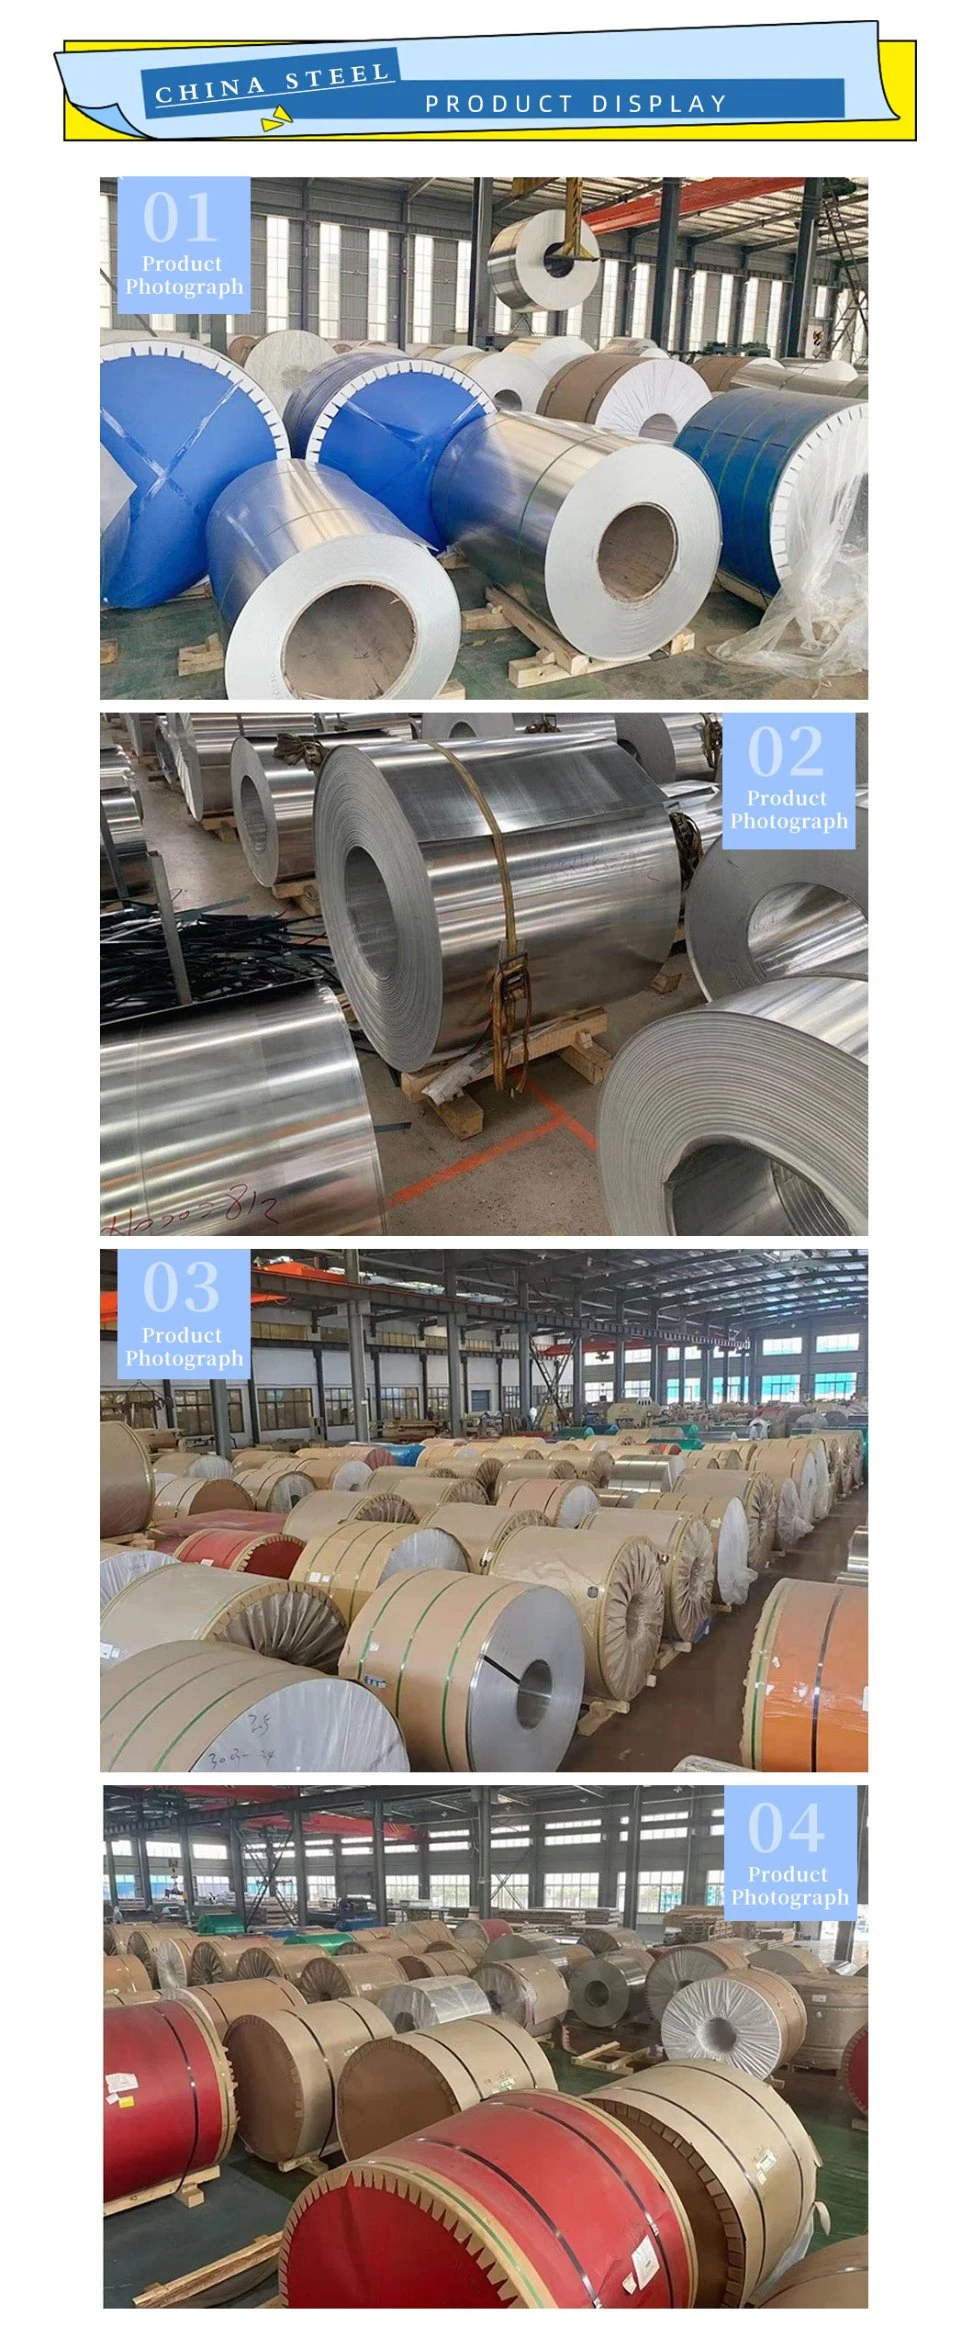 1000, 3000, 5000 Series Aluminium Coil Price with China Manufacturer